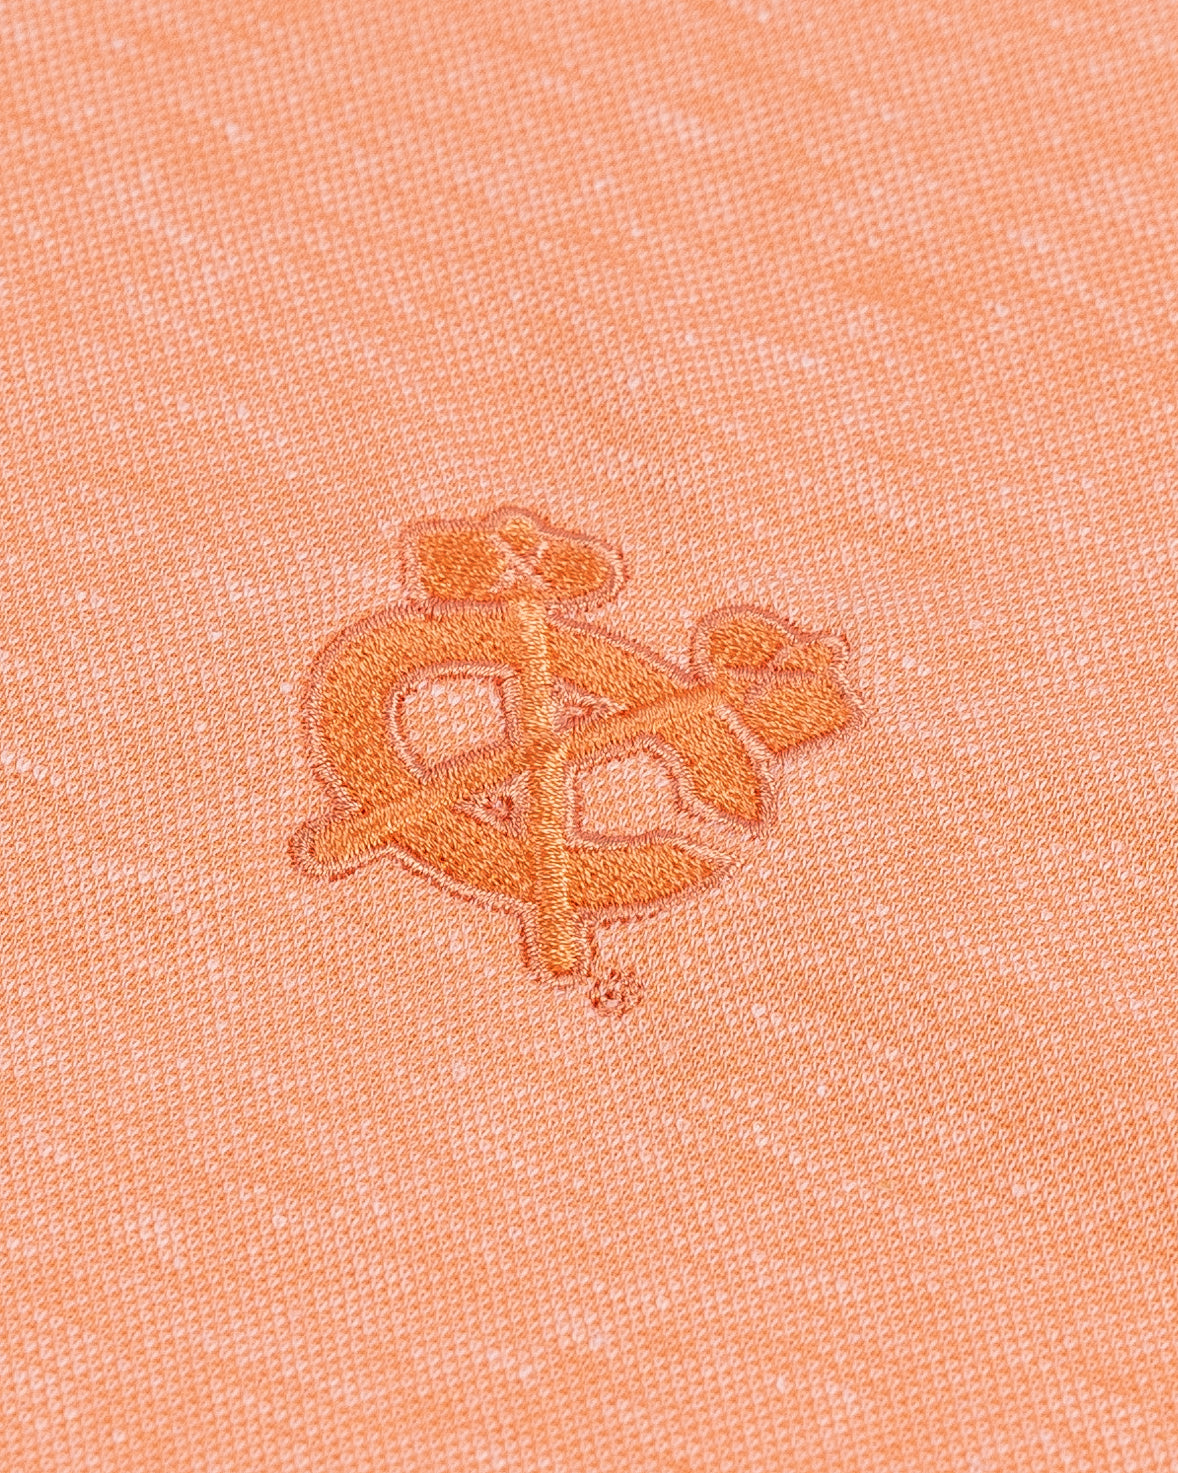 orange TravisMathew polo with Chicago Blackhawks secondary logo embroidered on left chest - detail lay flat